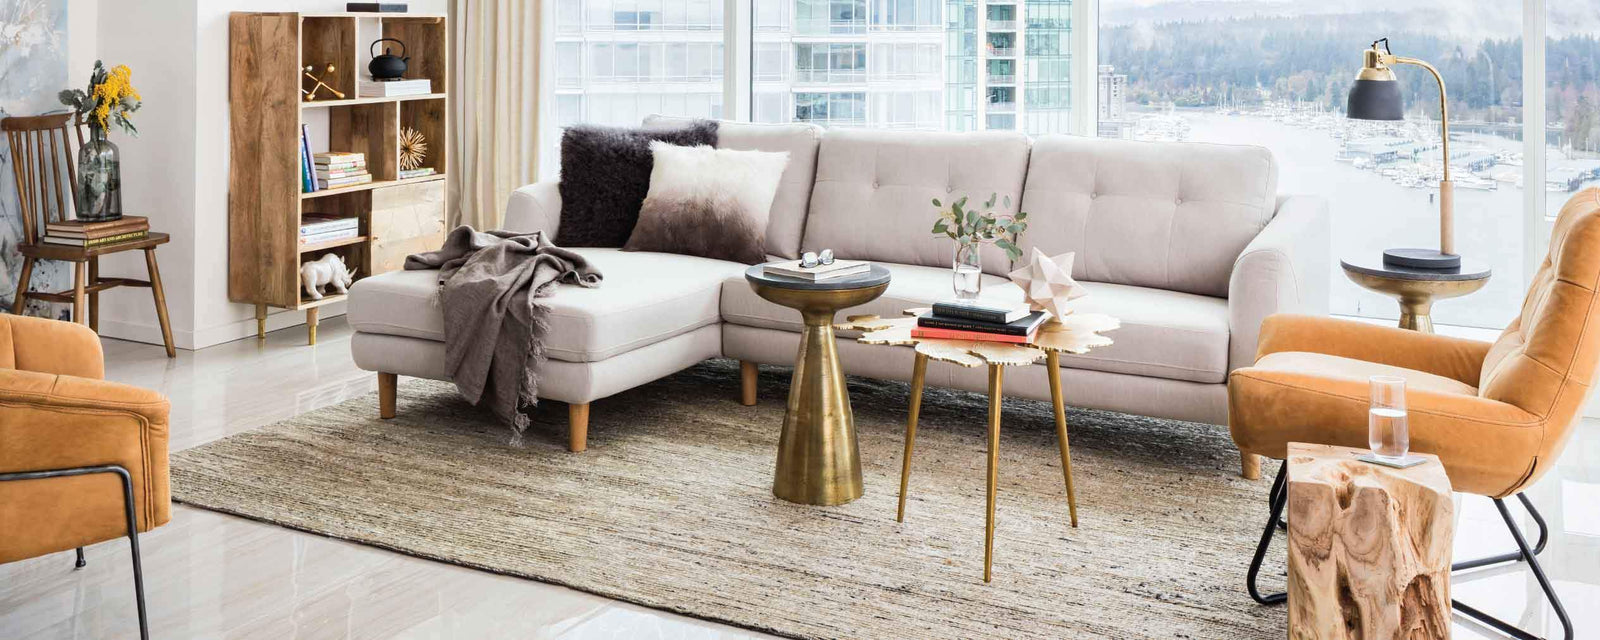 Mid Century Modern Living Room Furniture Froy Com